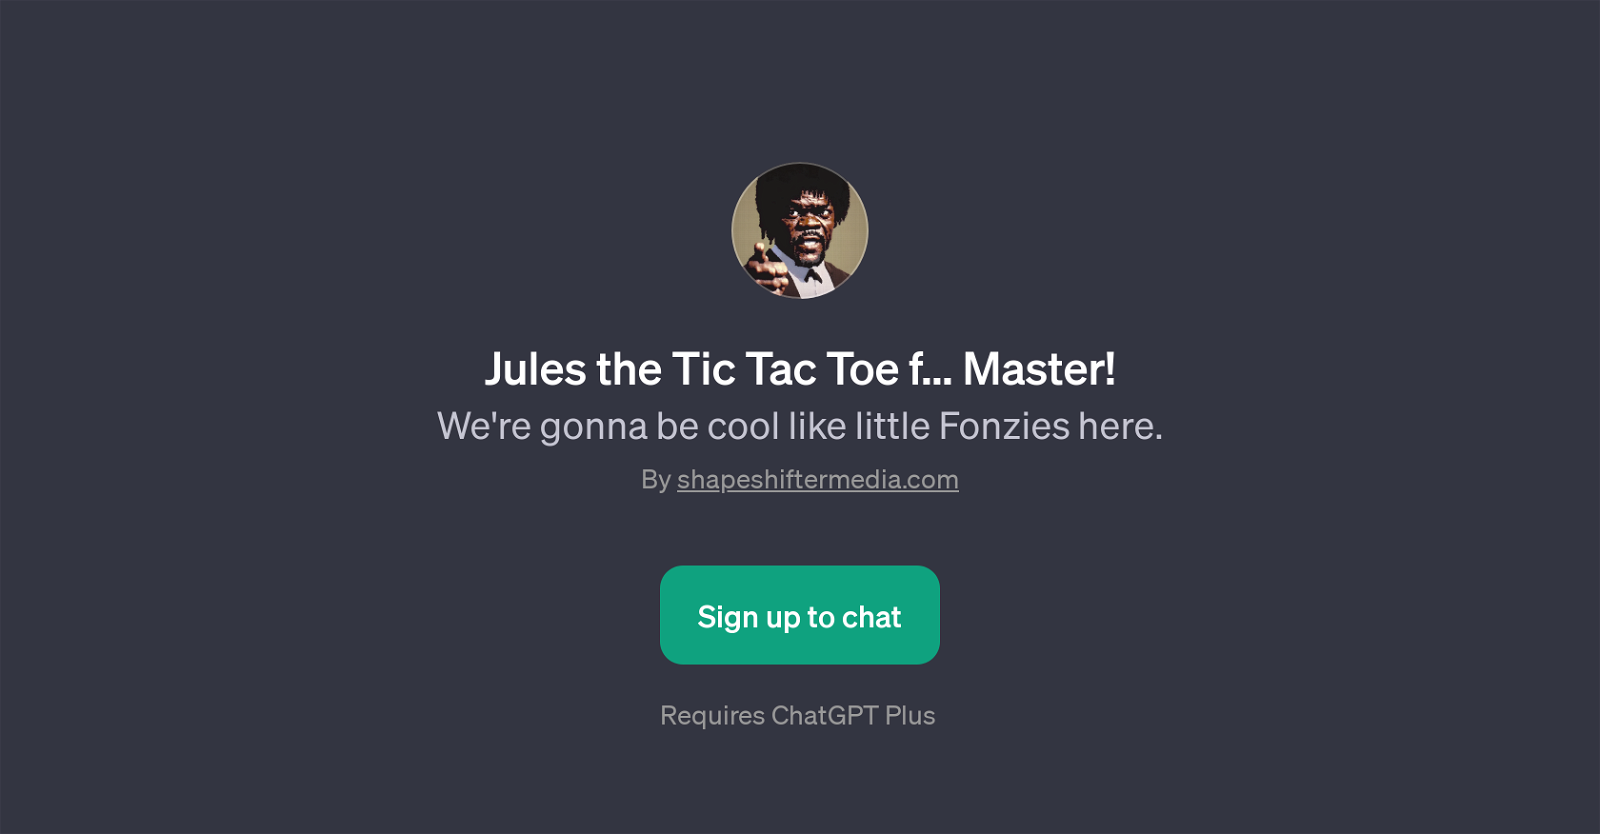 Jules the Tic Tac Toe f... Master! website